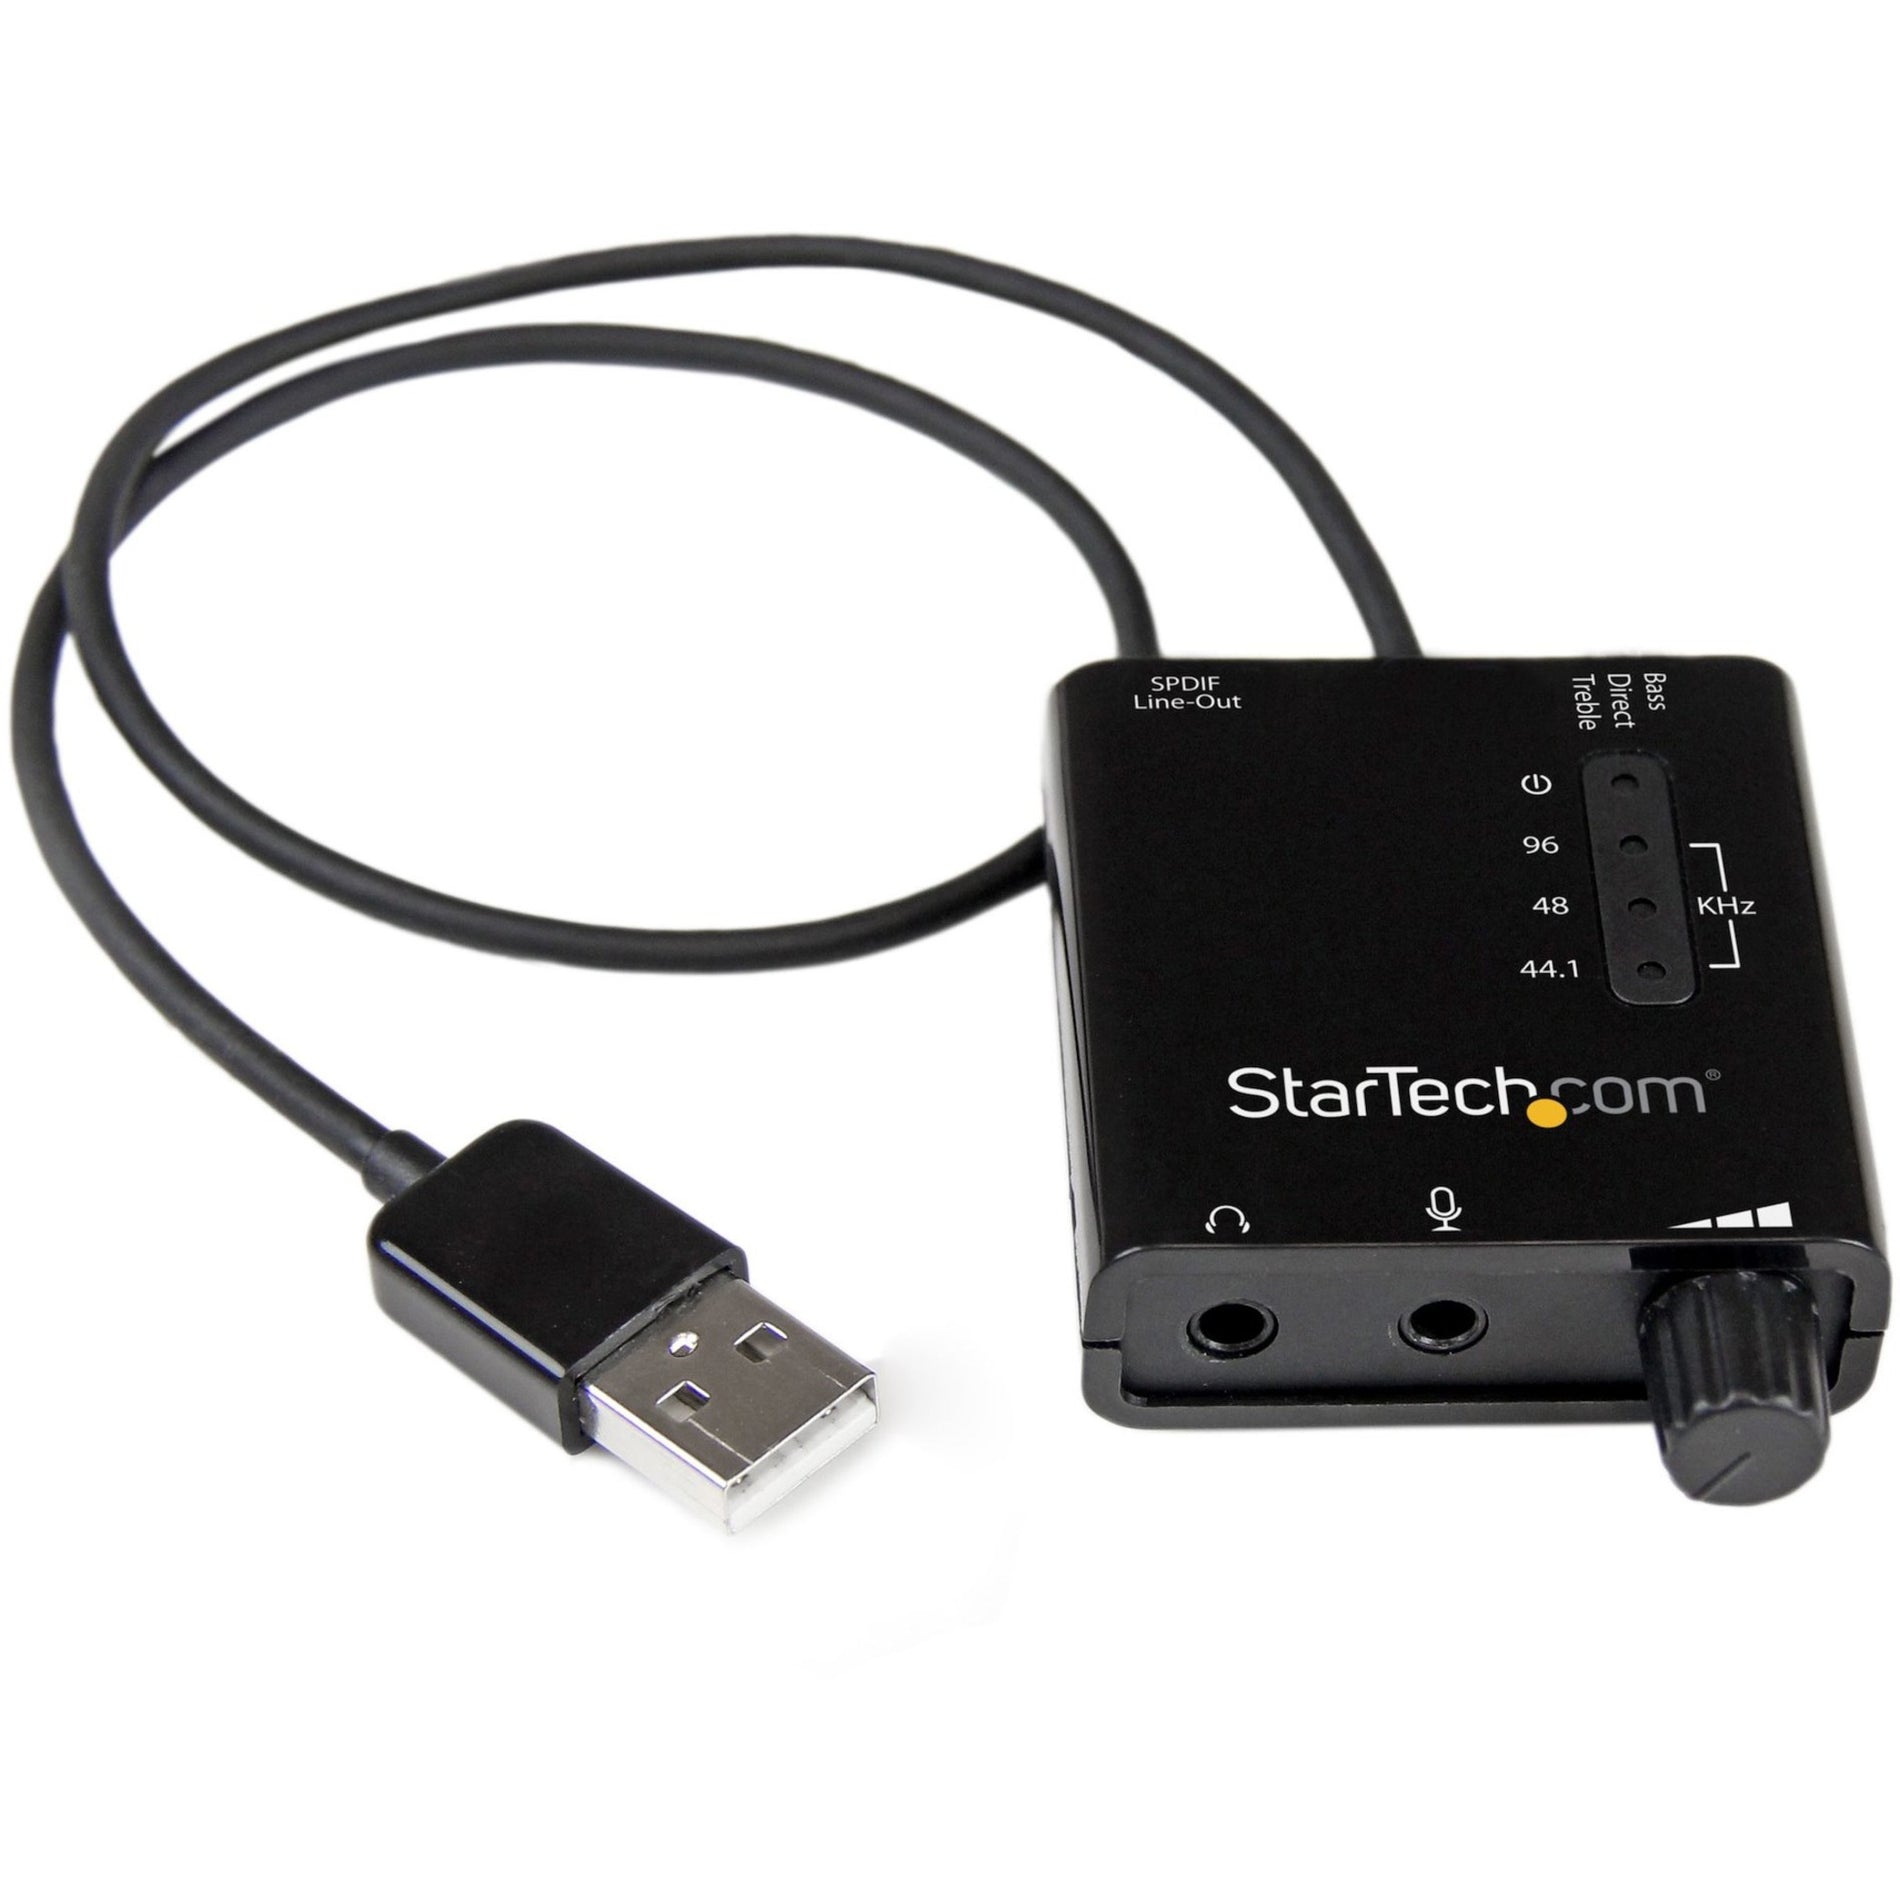 StarTech.com ICUSBAUDIO2D USB Stereo Audio Adapter External Sound Card with SPDIF Digital Audio, 5.1 Sound Channels, 24-bit DAC, 96 kHz Maximum Playback Sampling Rate